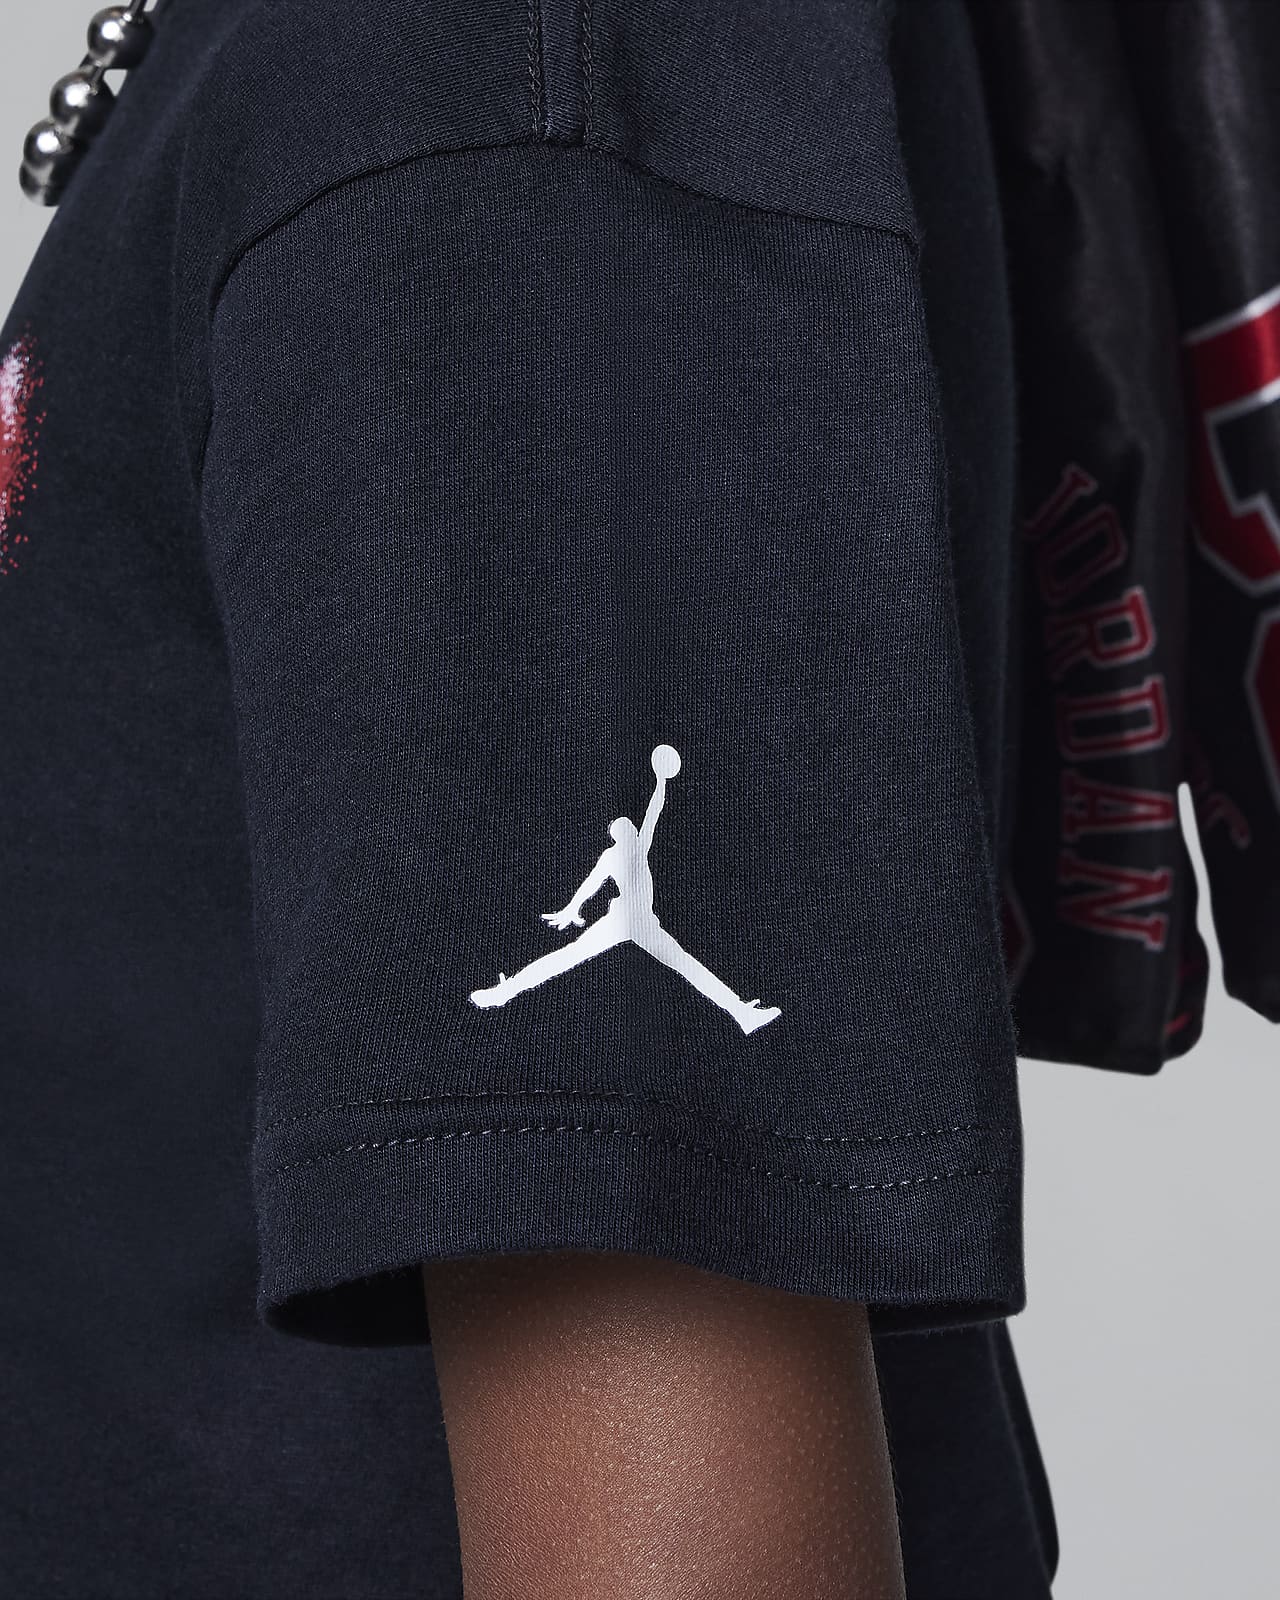 Jordan Camiseta - Niño/a. Nike ES